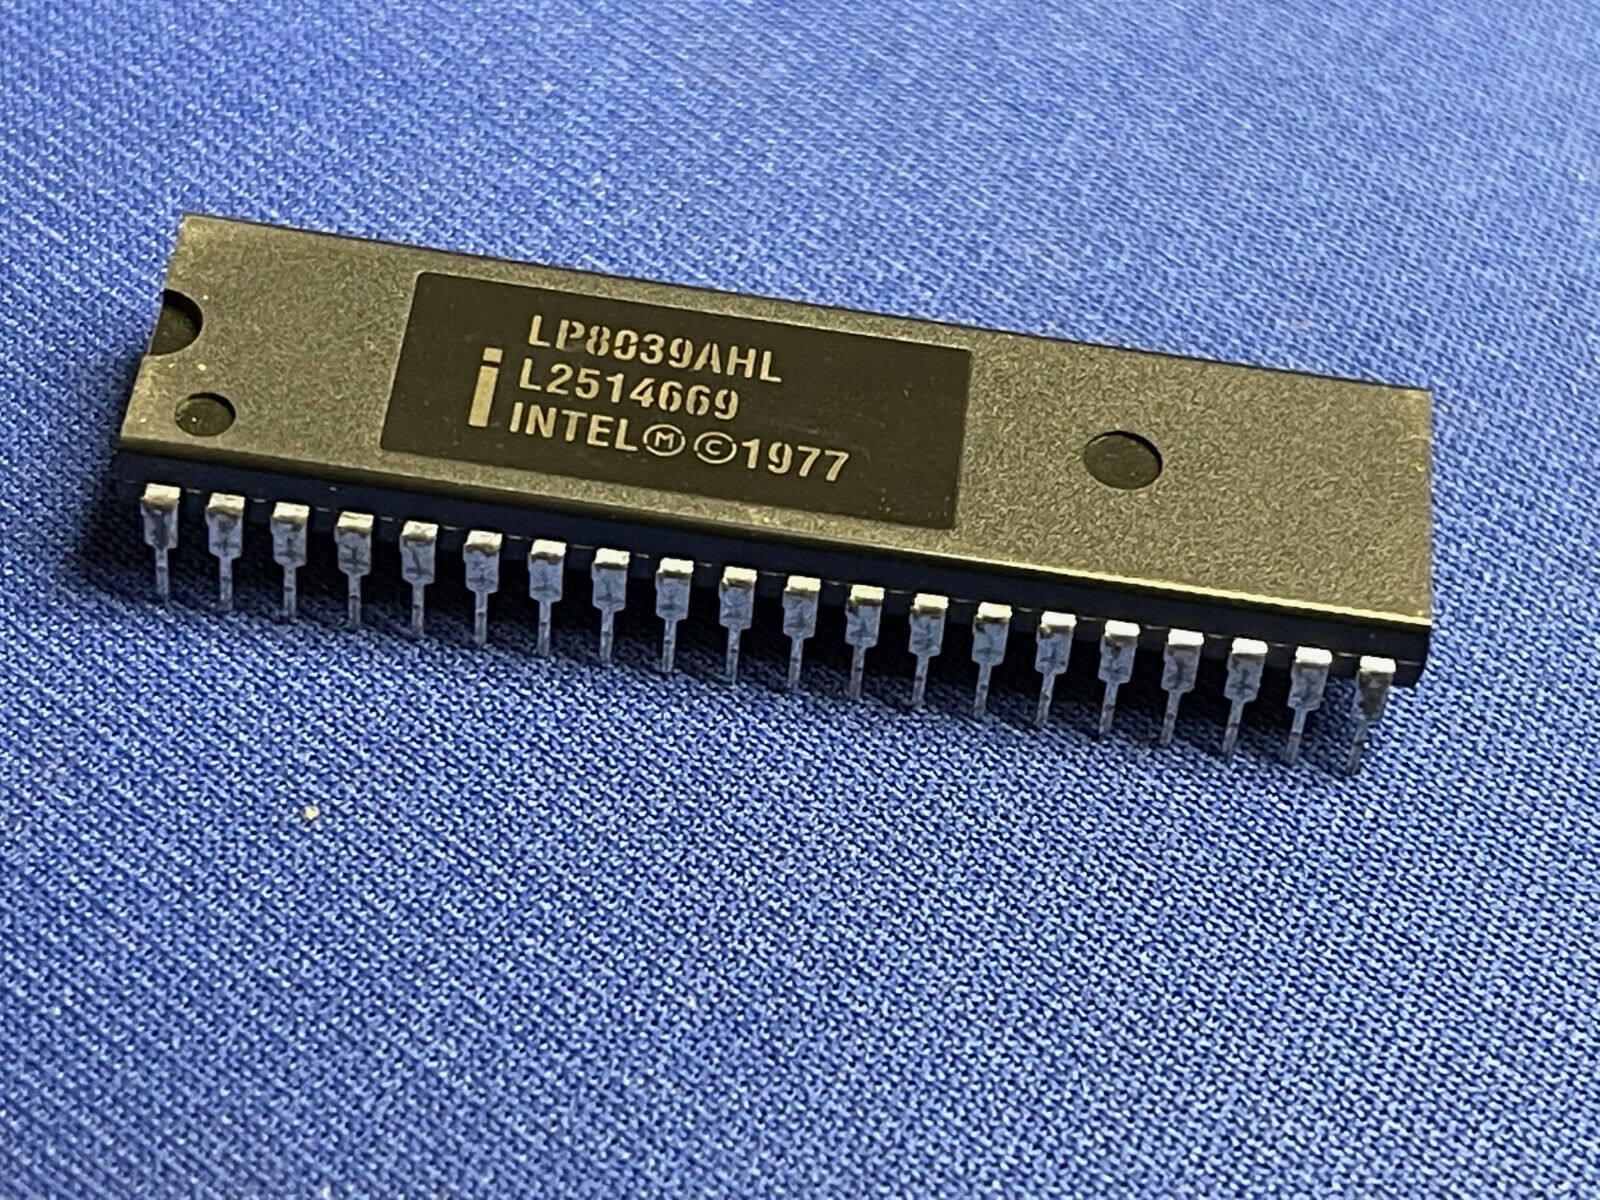 LP8039AHL L2514669 INTEL 8039H CPU VINTAGE 1984 40-Pin DIP Rare COLLECTIBLE